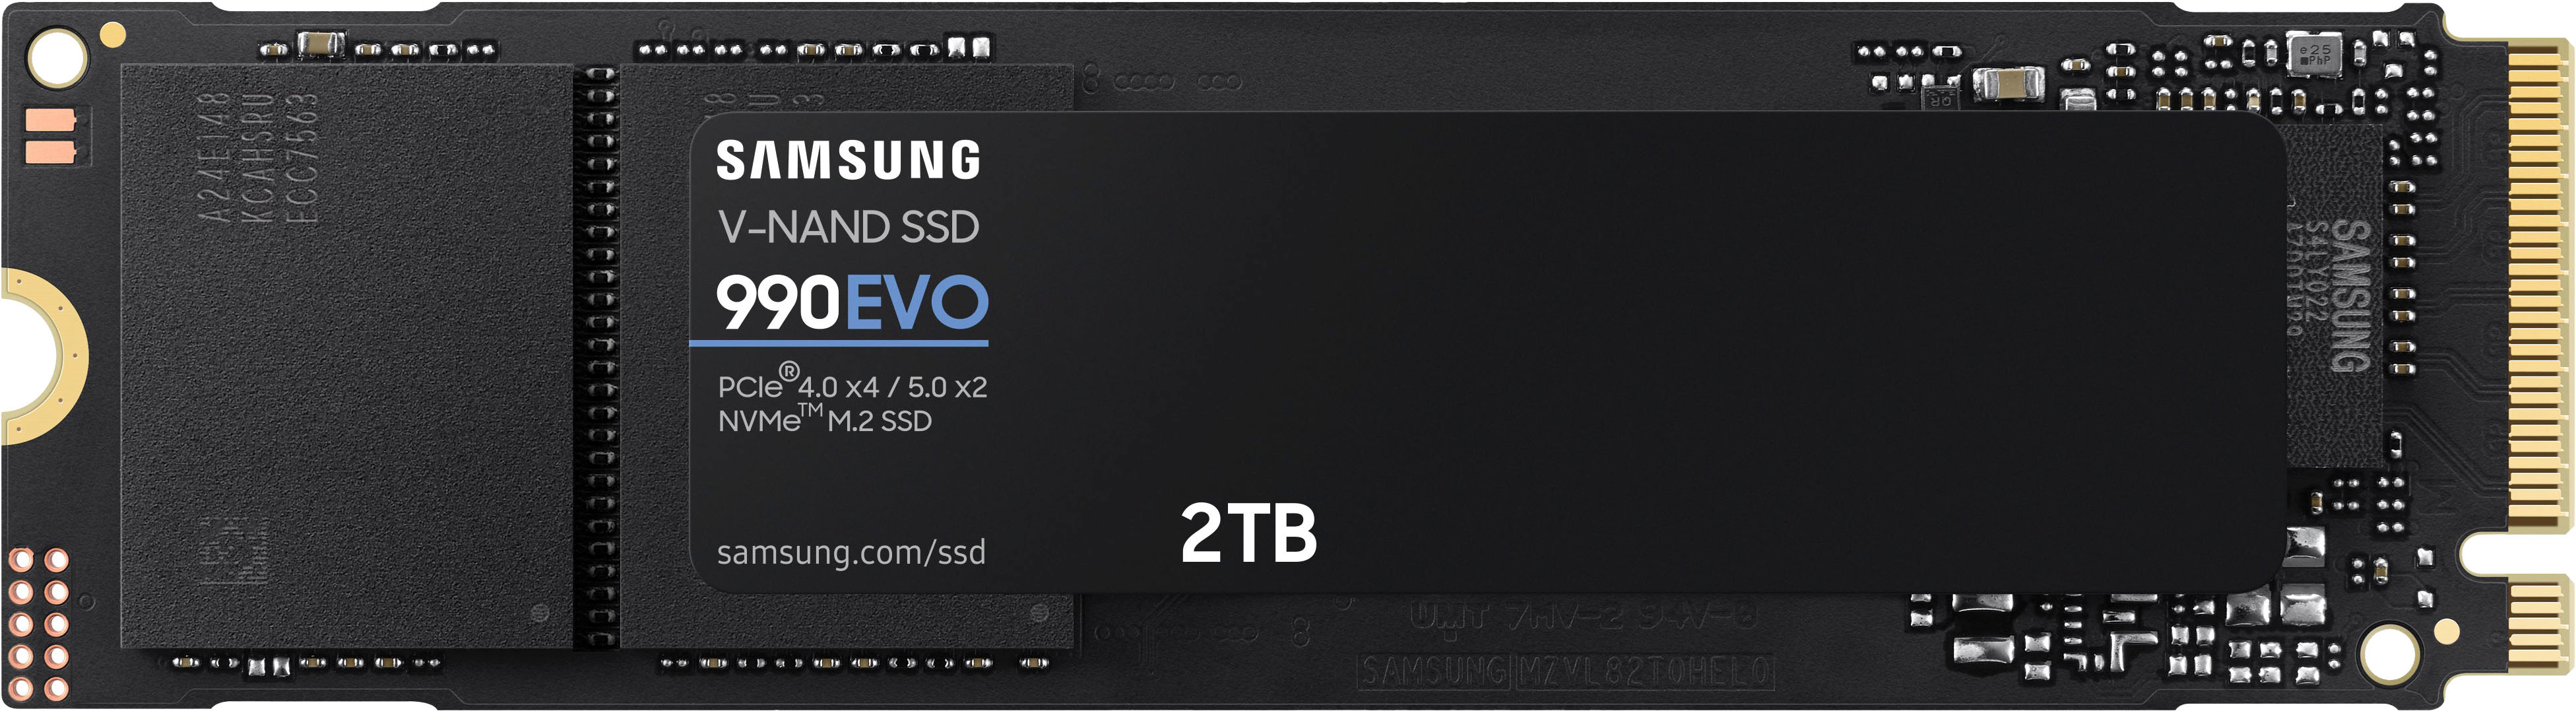 Samsung 990 EVO SSD 2TB, PCIe 5.0 x2 M.2 2280, Speeds Up to 5,000MB/s  MZ-V9E2T0B/AM - Best Buy